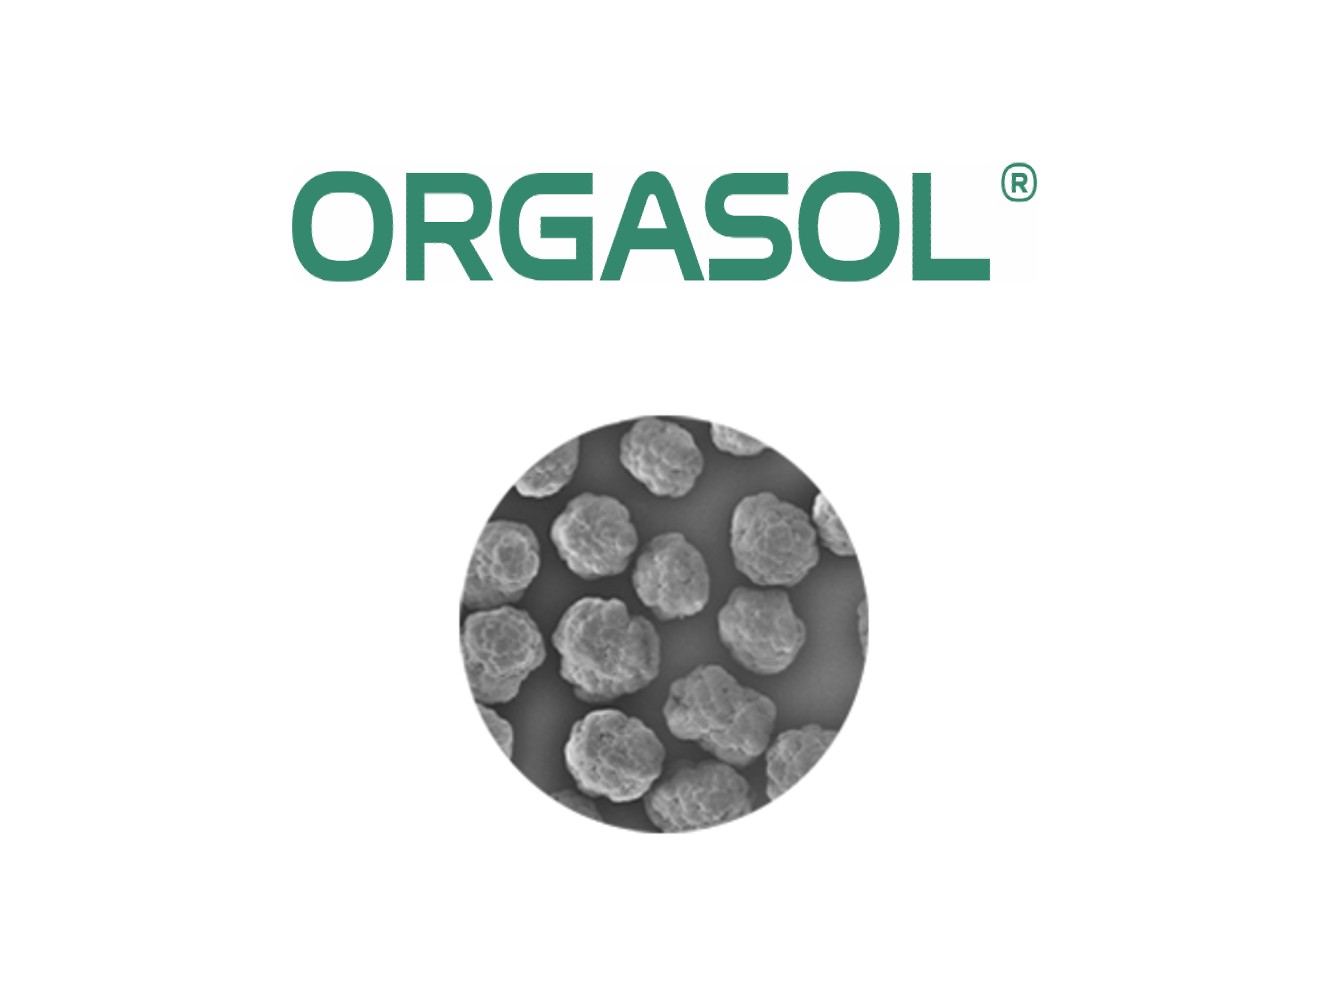 Orgasol-logo-micrograph-v2.png